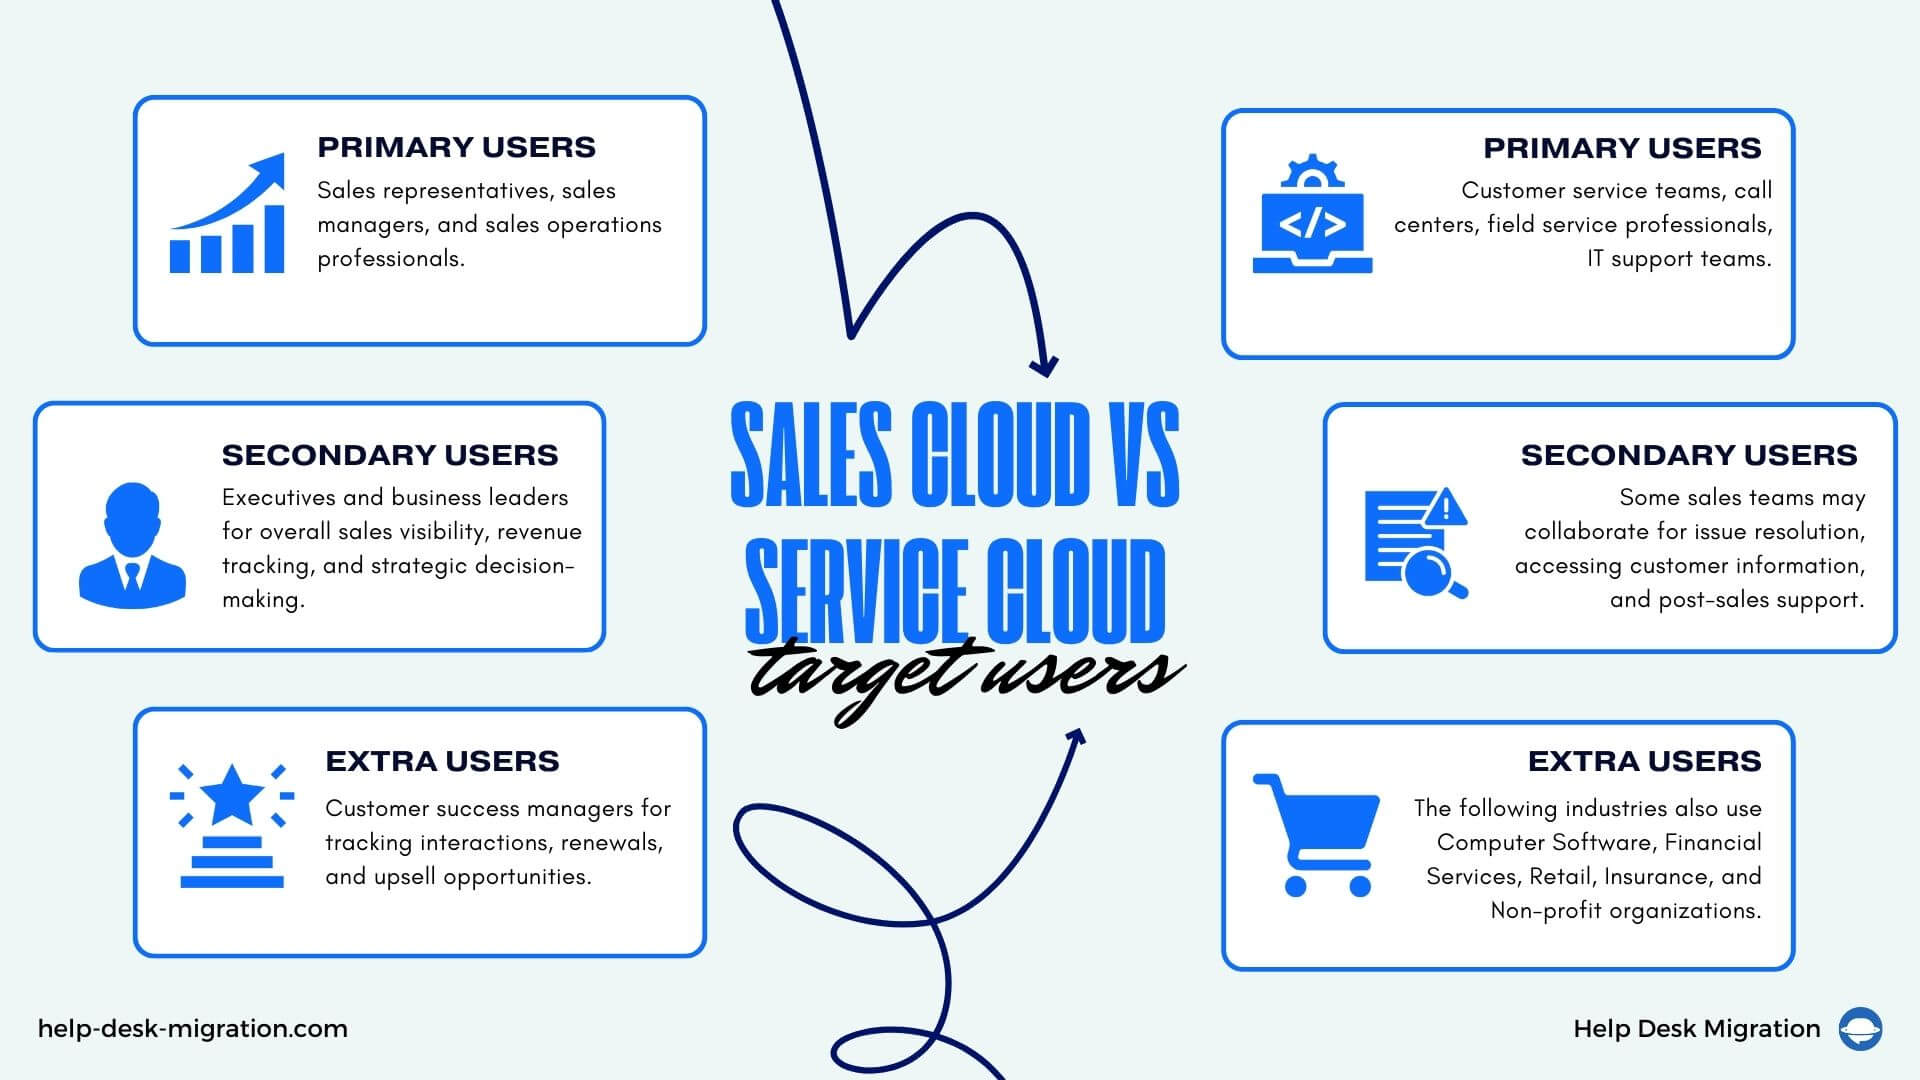 Zielbenutzer von Sales Cloud vs Service Cloud | Help Desk Migration Blog